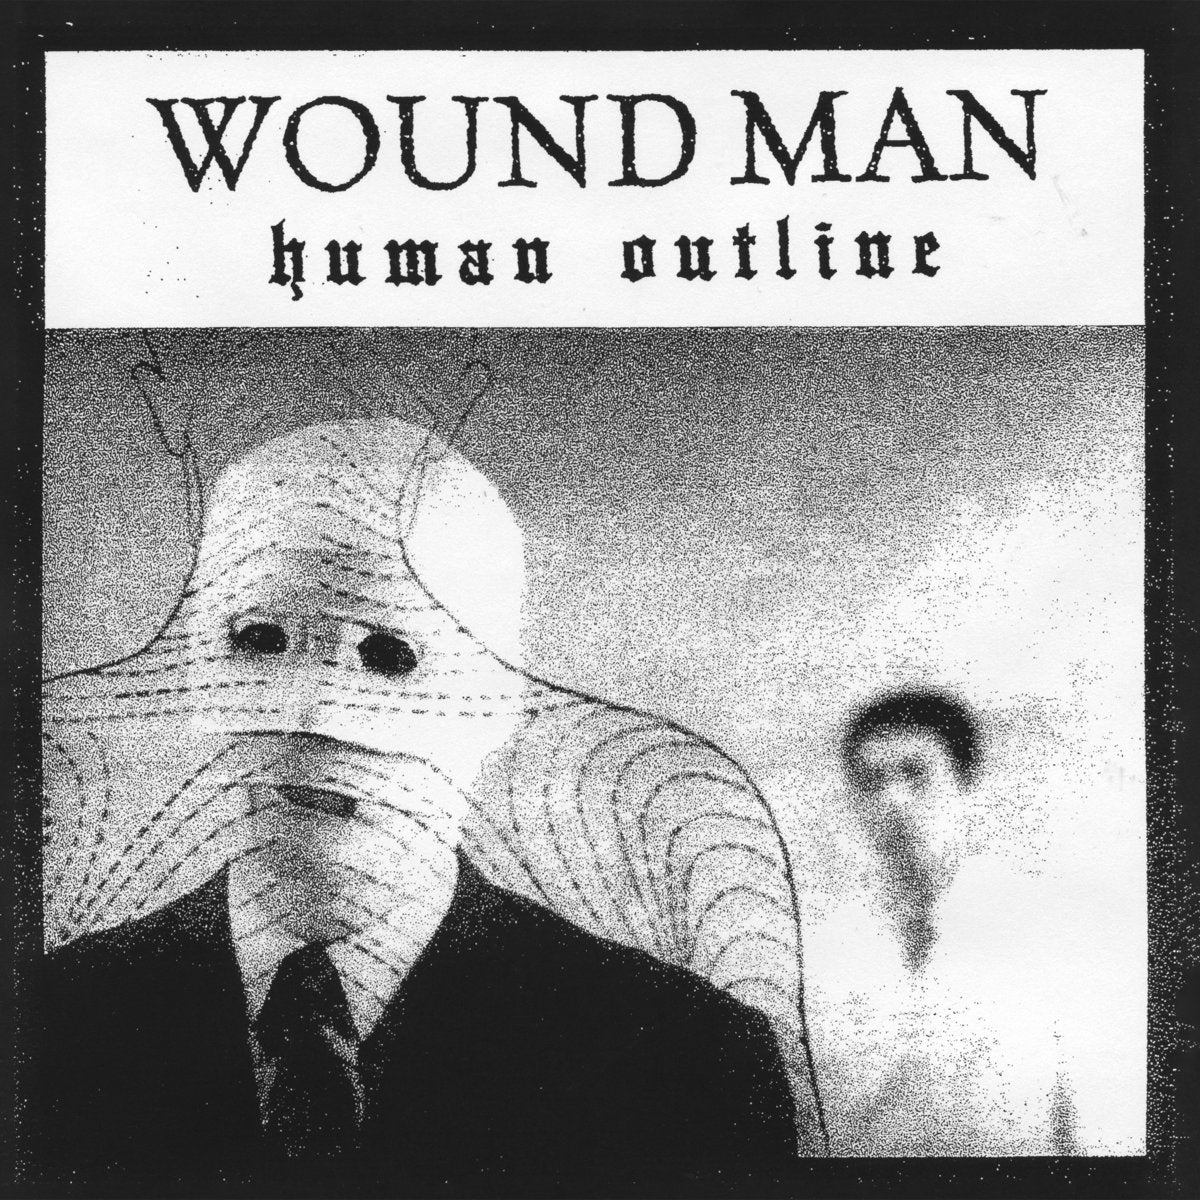 WOUND MAN - HUMAN OUTLINE Vinyl LP